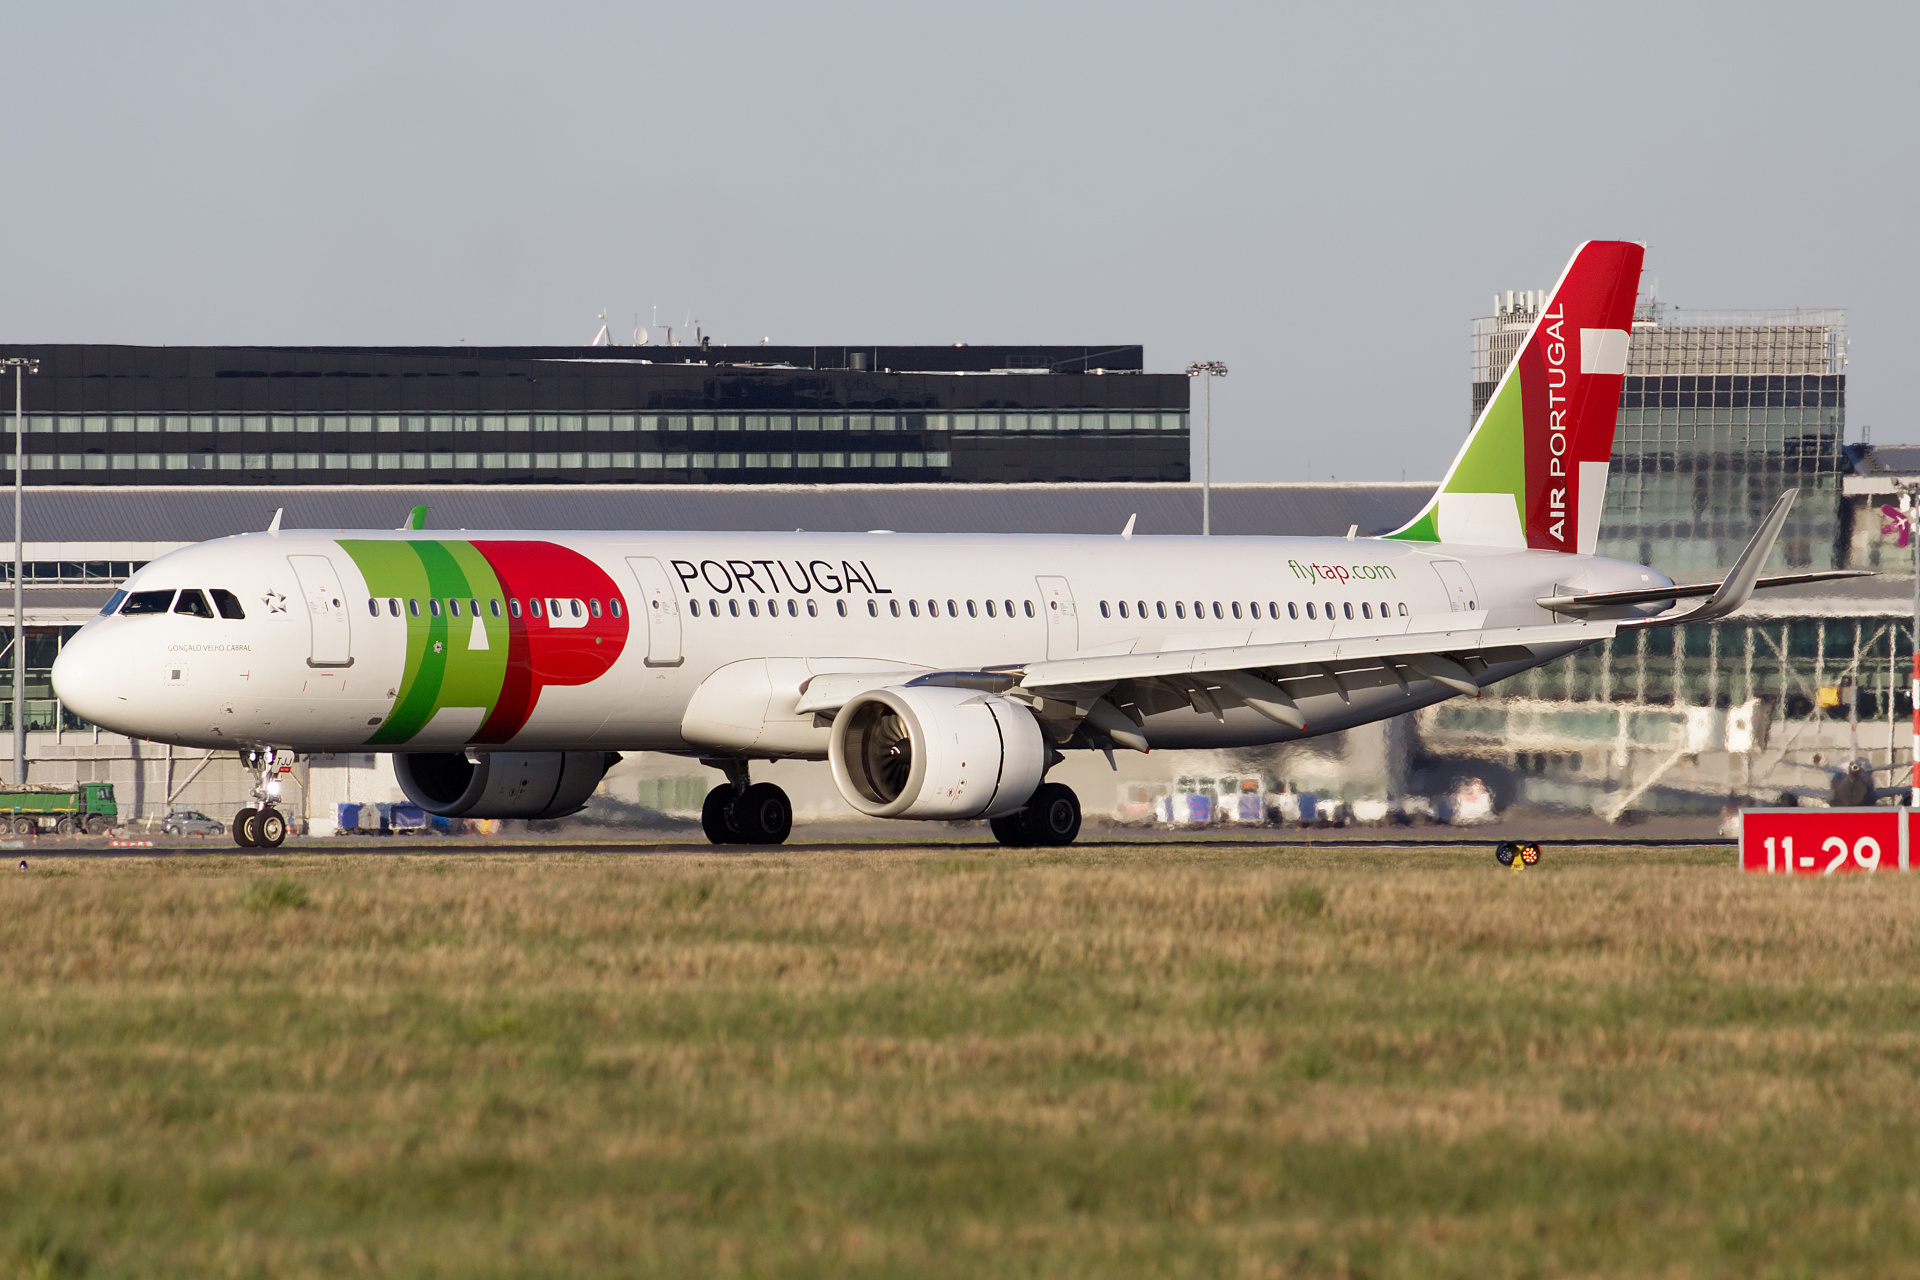 CS-TJJ (Aircraft » EPWA Spotting » Airbus A321neo » TAP Air Portugal)